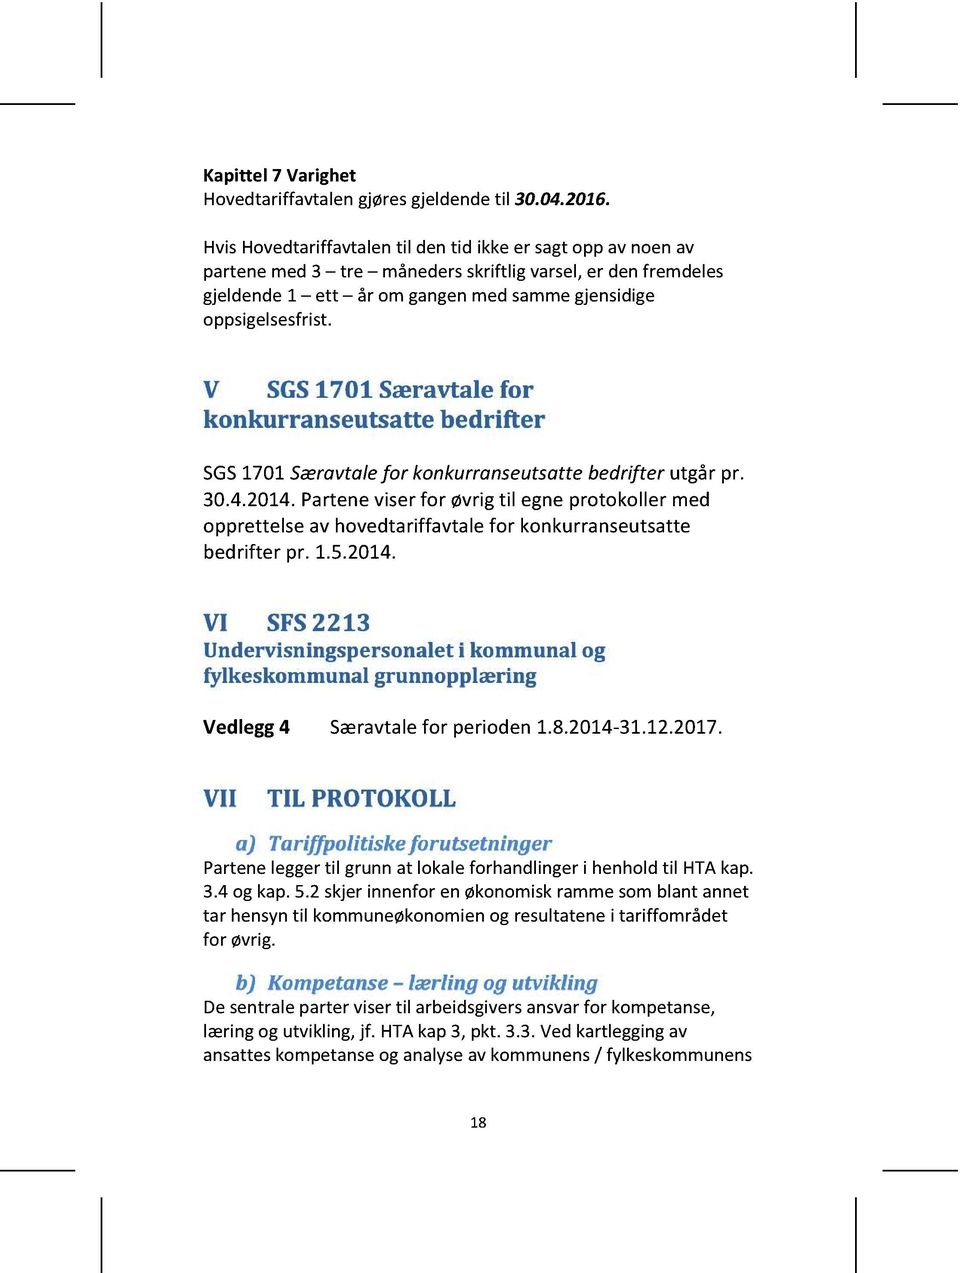 V SGS1701 Særavtale for konkurranseutsatte bedrifter SGS1701Særavtalefor konkurranseutsattebedrifter utgår pr. 30.4.2014.